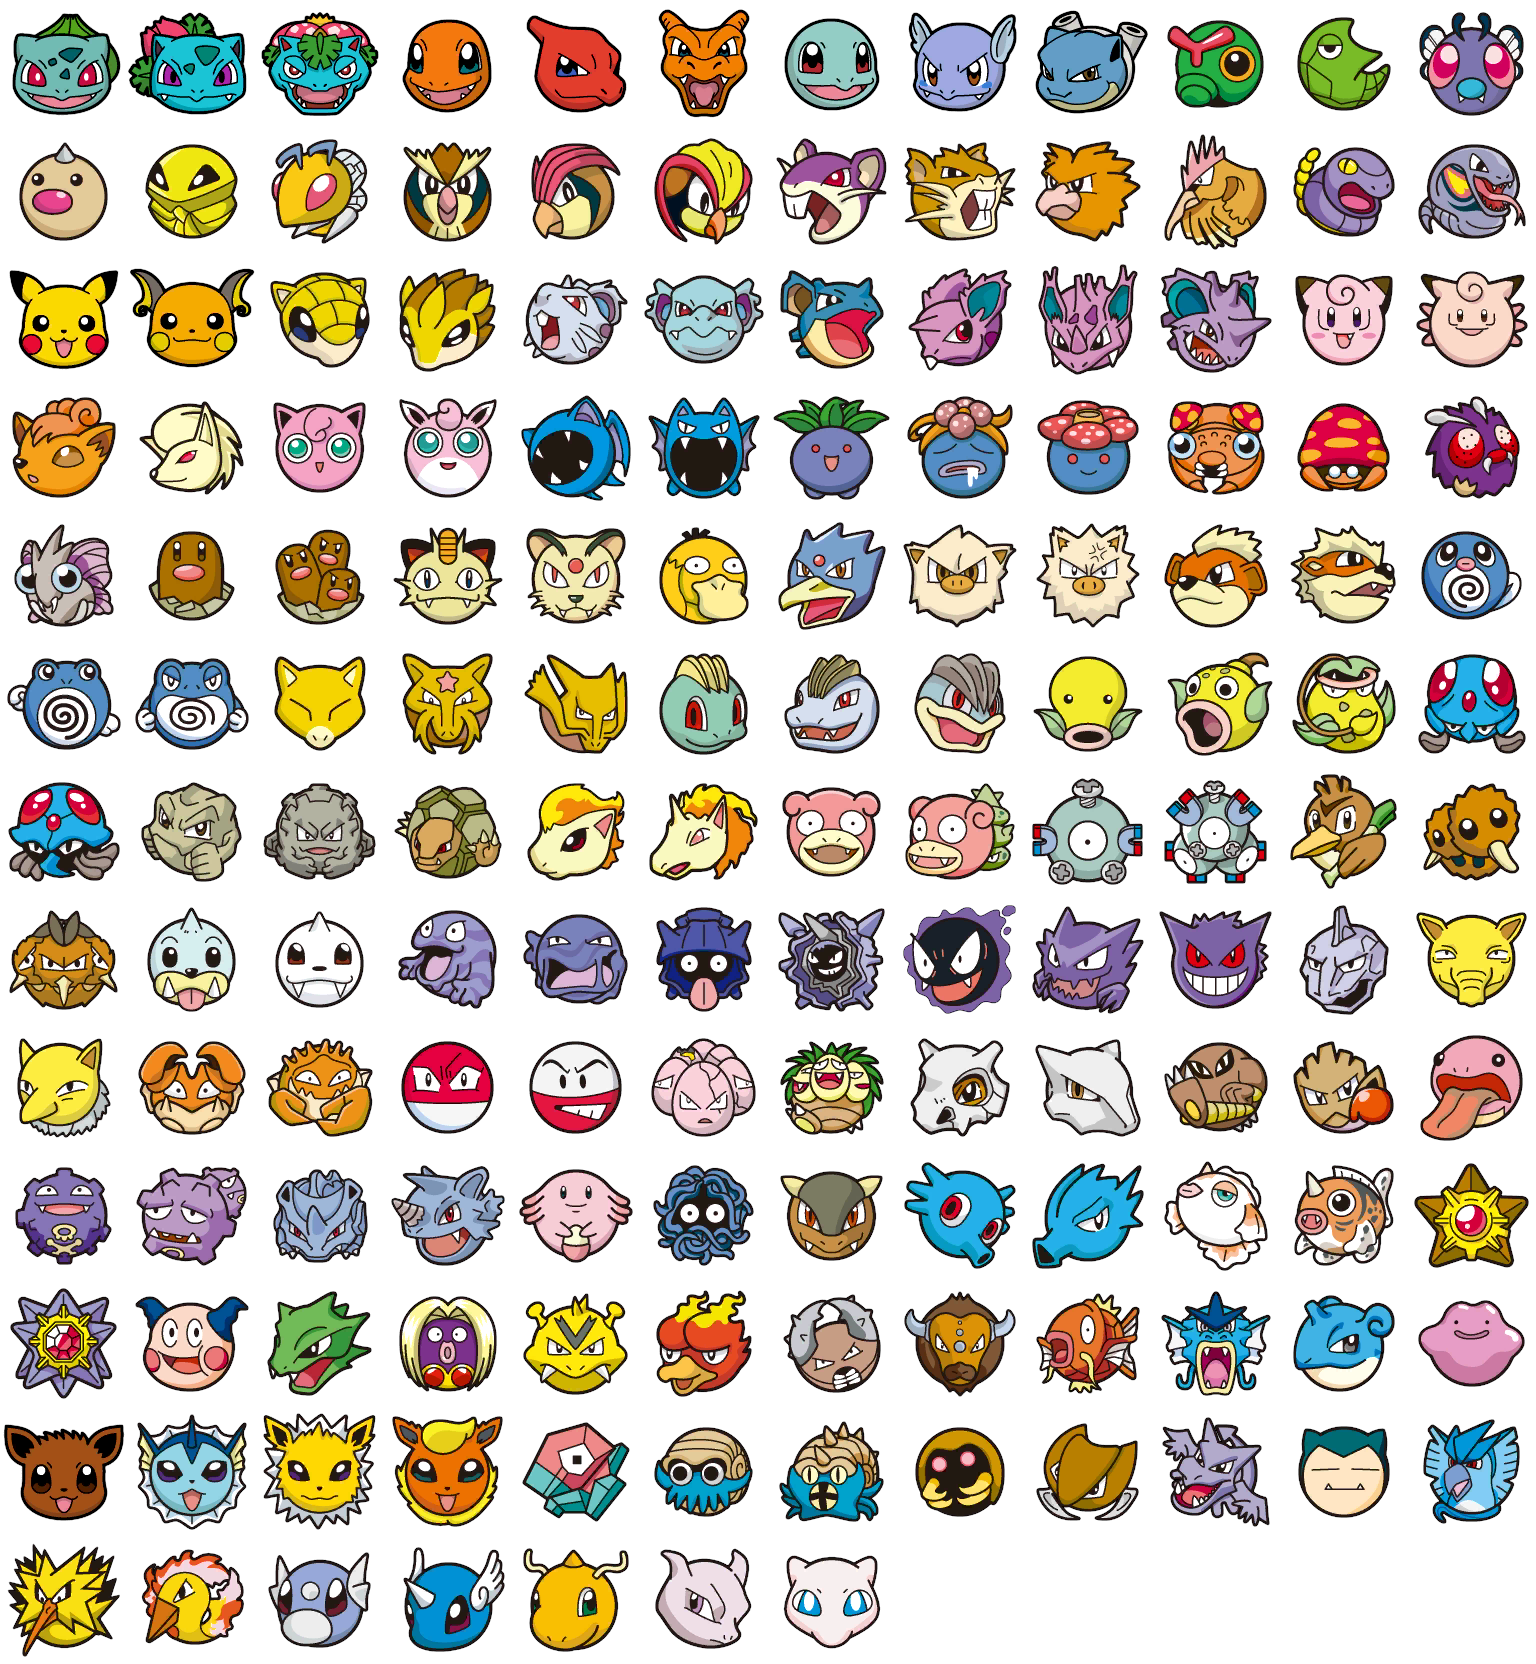 Pokémon Battle Trozei! / Pokémon Link: Battle! - Pokémon (1st Generation)